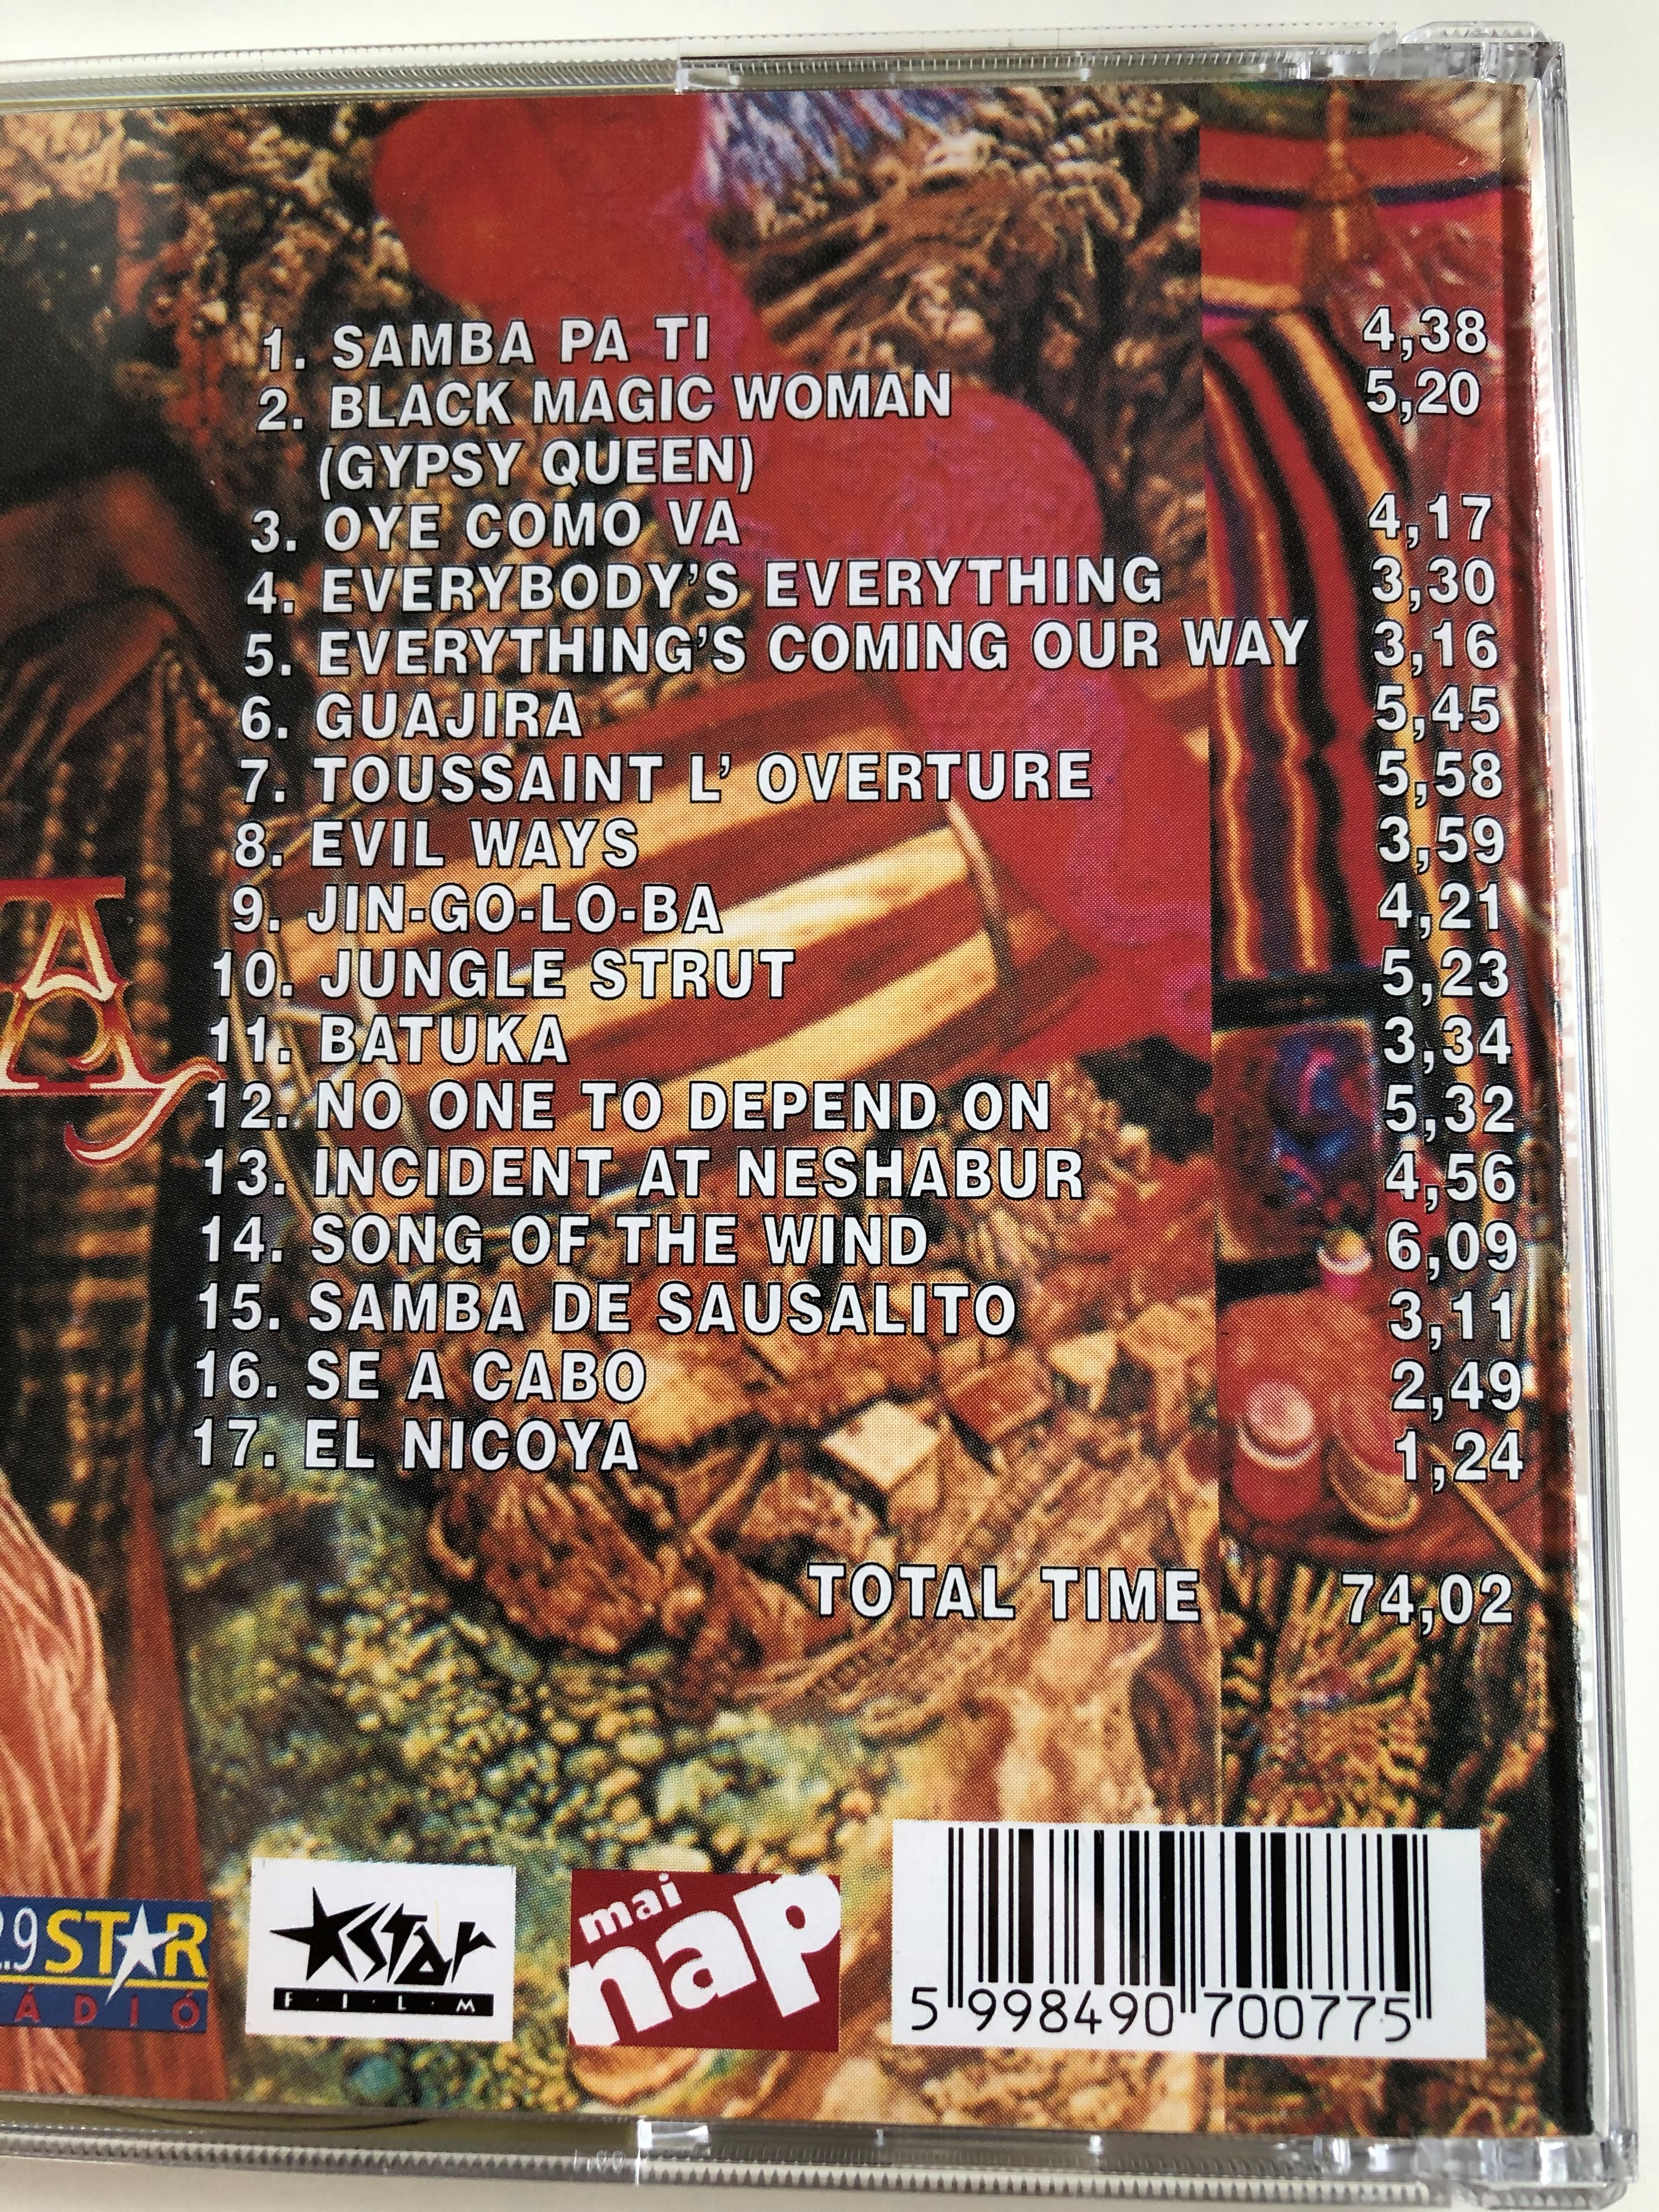 santana-best-of-pop-classic-total-time-7402-euroton-audio-cd-eucd-0077-3-.jpg